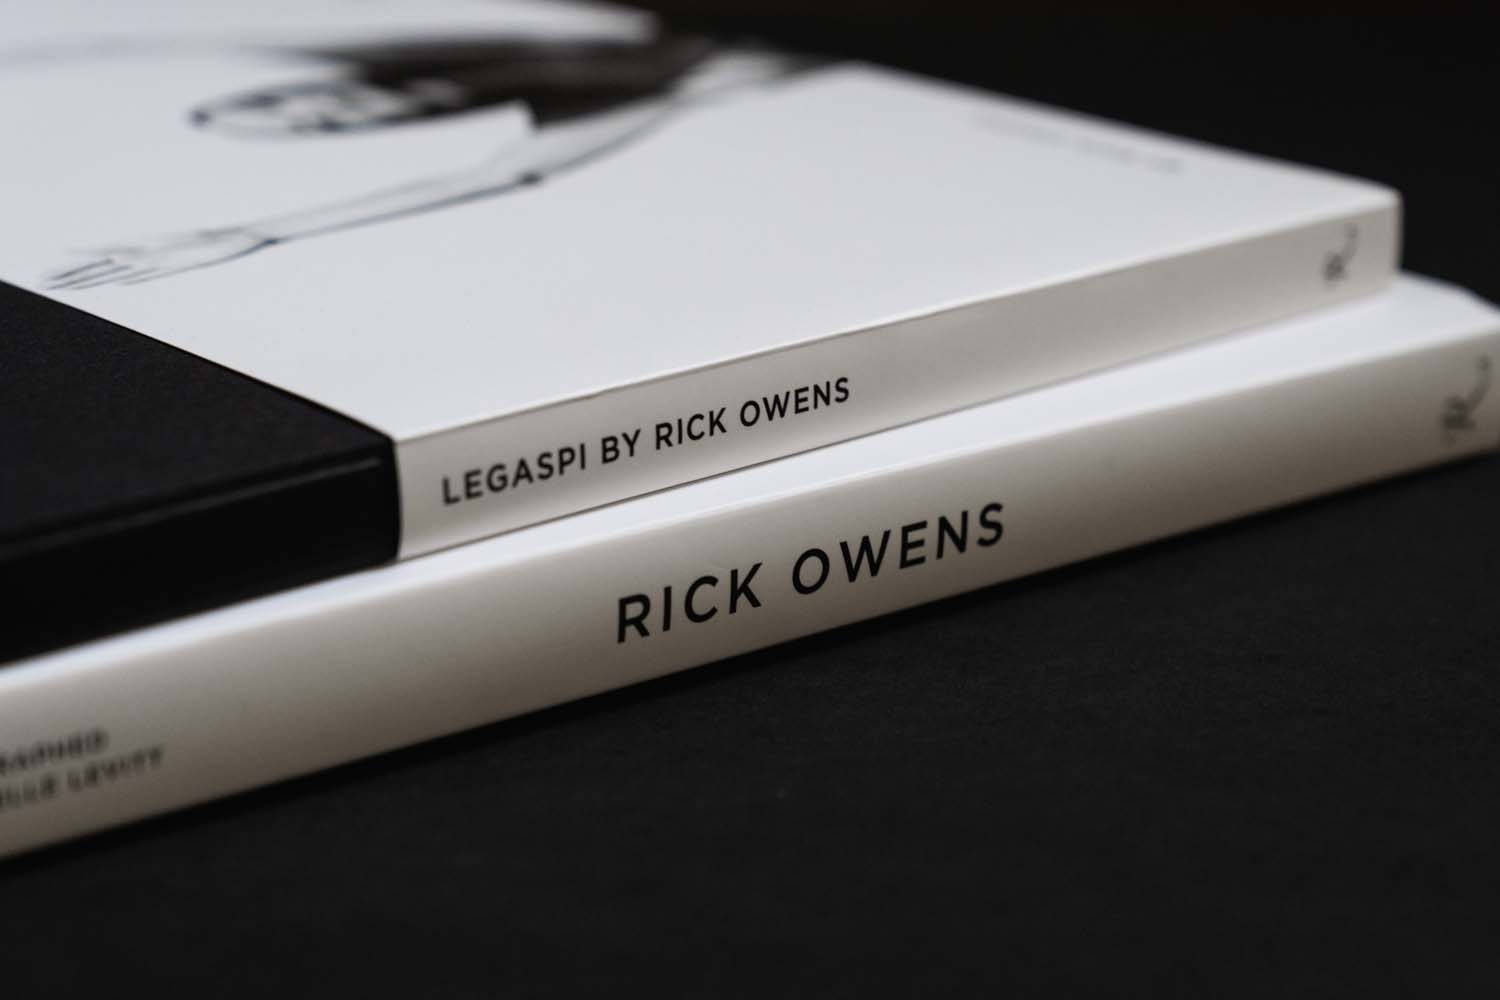 Rick Owens Rizzoli Books Larry Legaspi Danielle Levitt